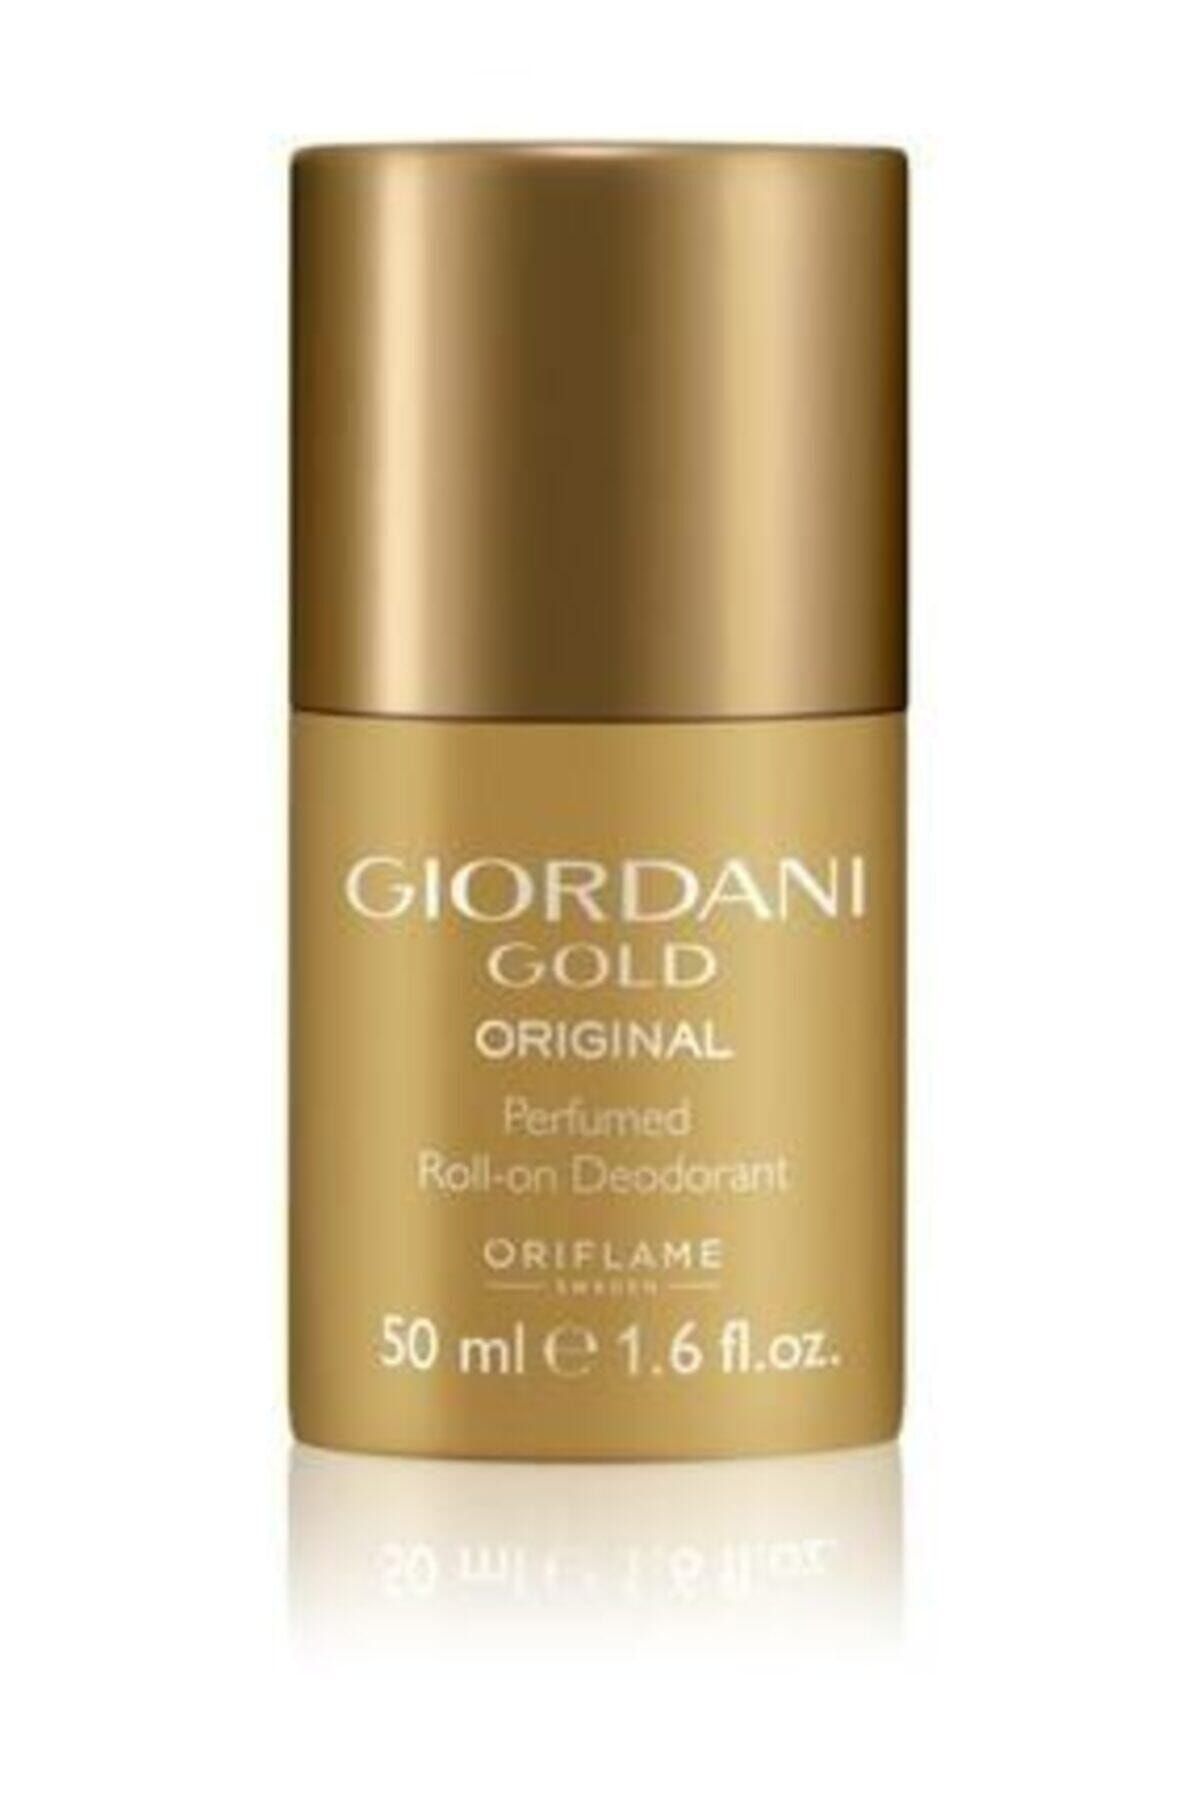 Oriflame Giordani Gold Original Parfümlü Roll-on Deodorant